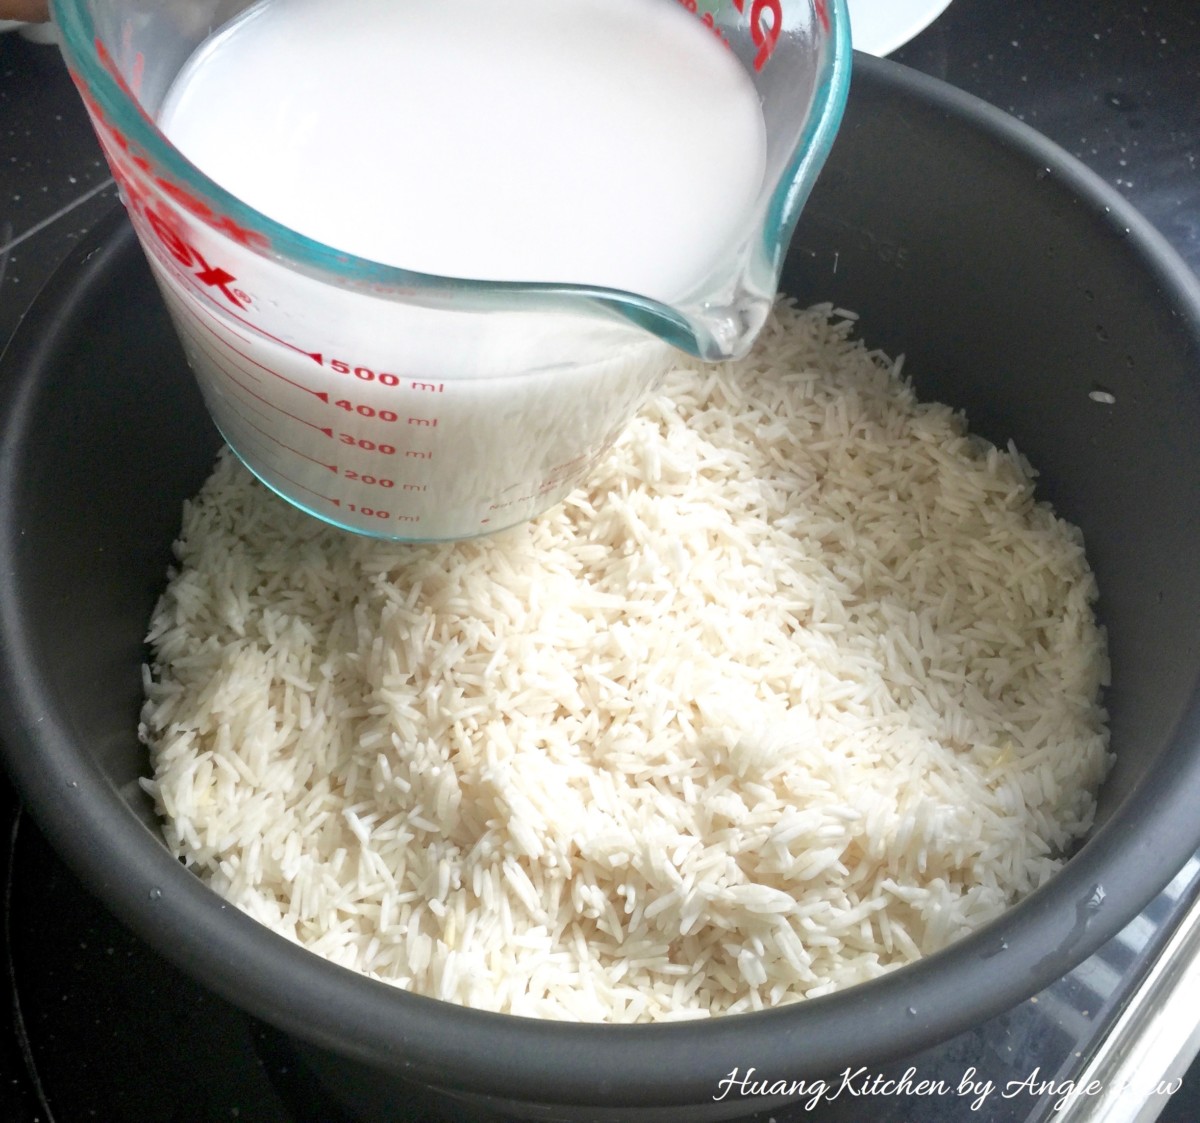 Nasi Lemak Recipe (Coconut Milk Steamed Rice) - pour coconut milk